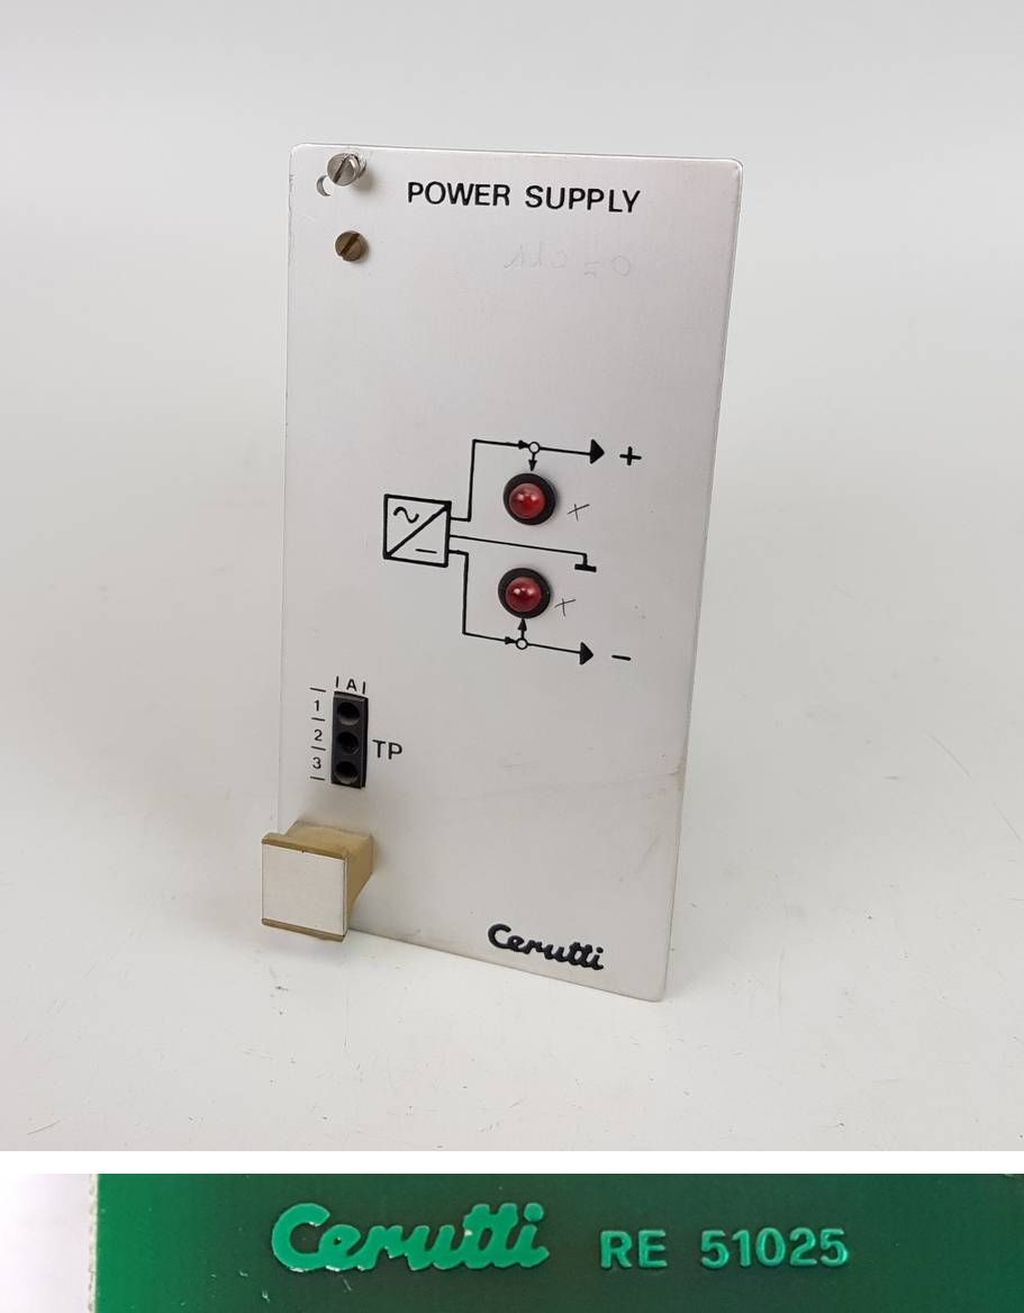 PP5173 Power Supply Cerutti RE 52025